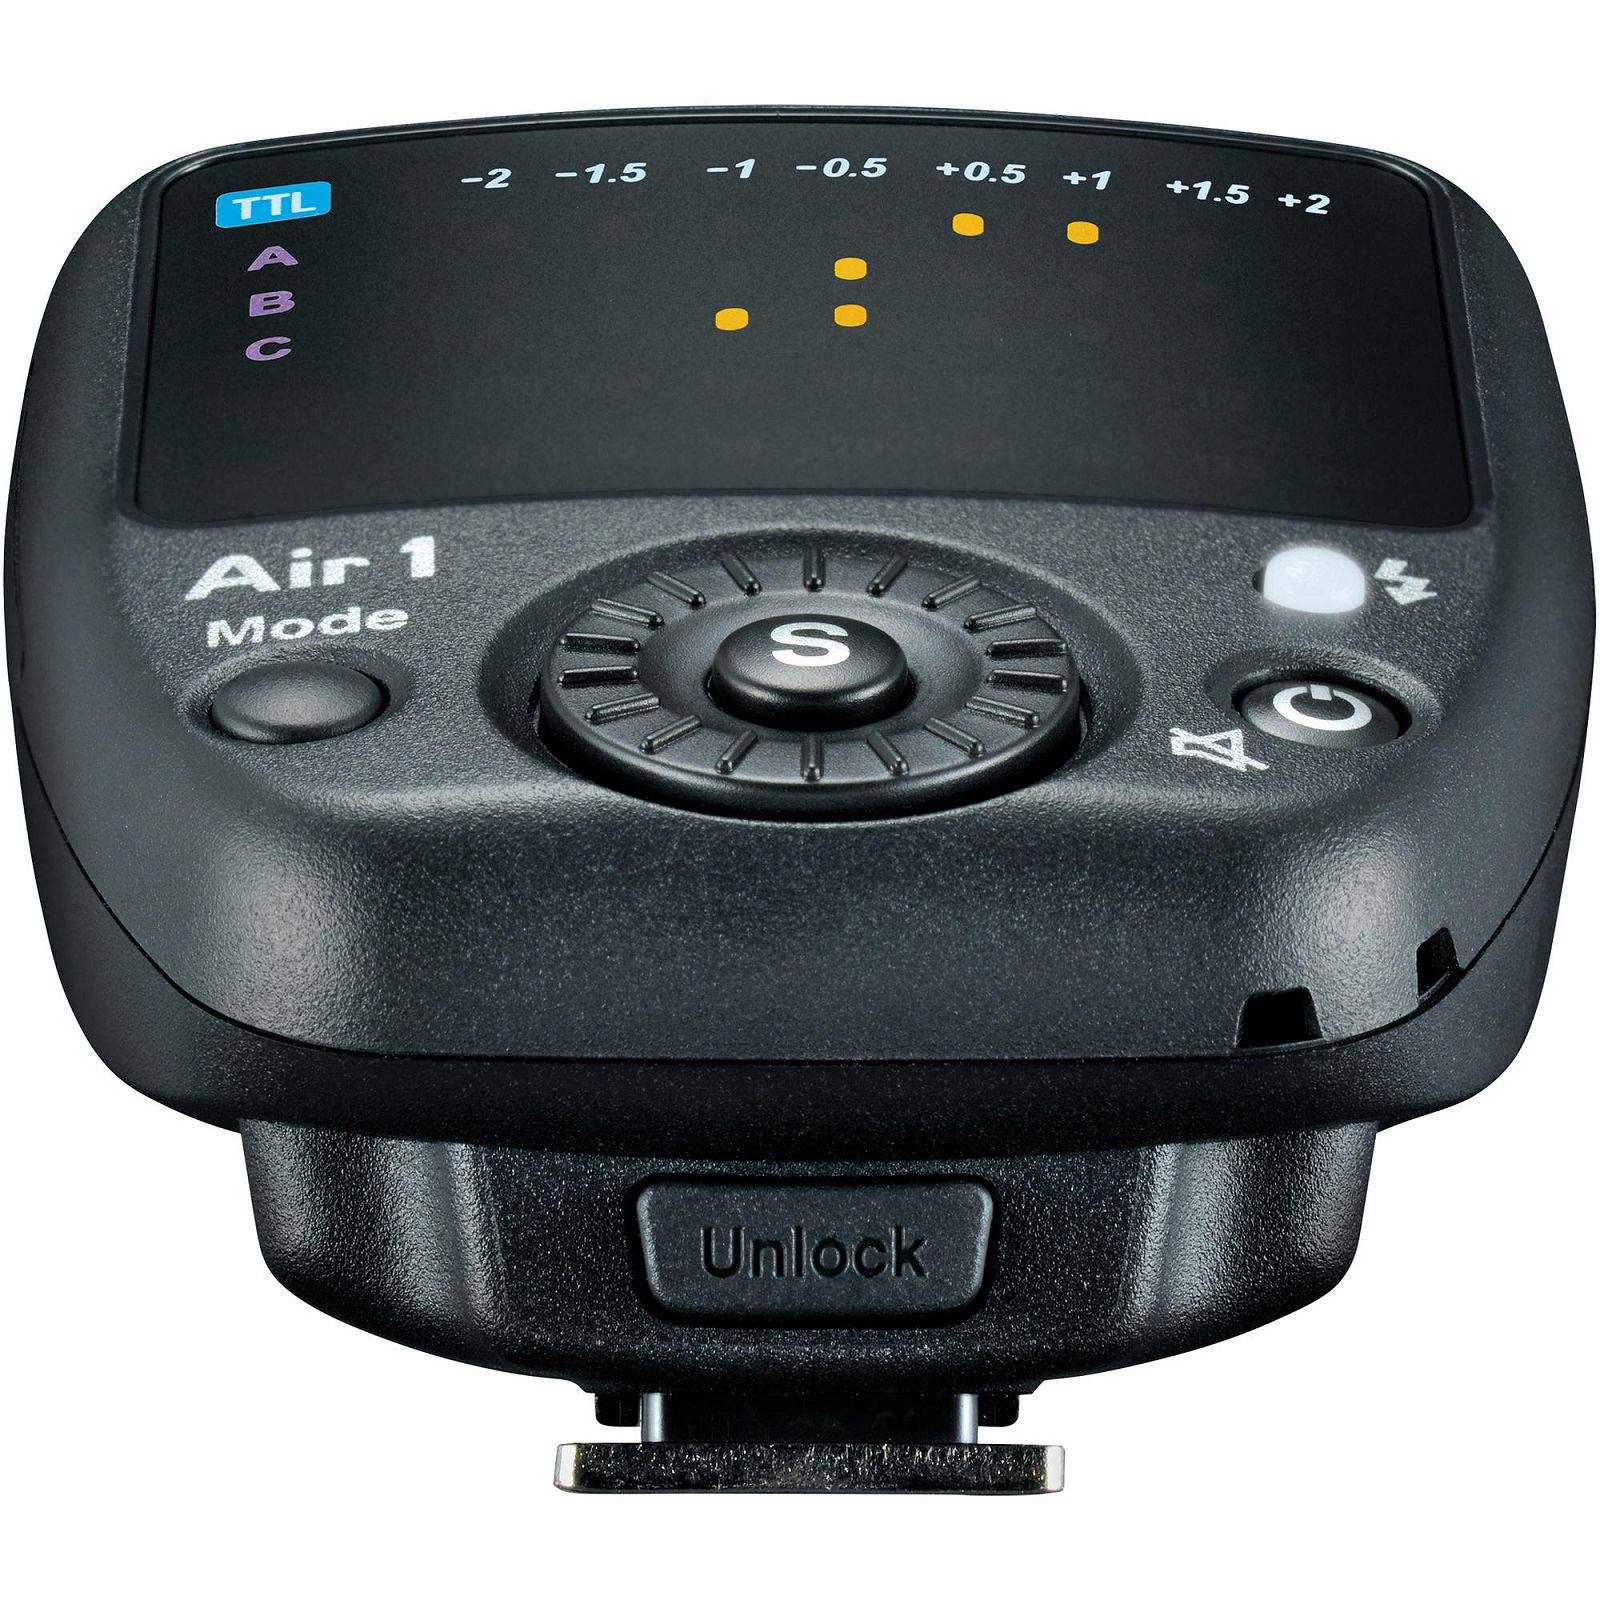 Nissin Commander Air 1 TTL HSS transmitter odašiljač za Canon